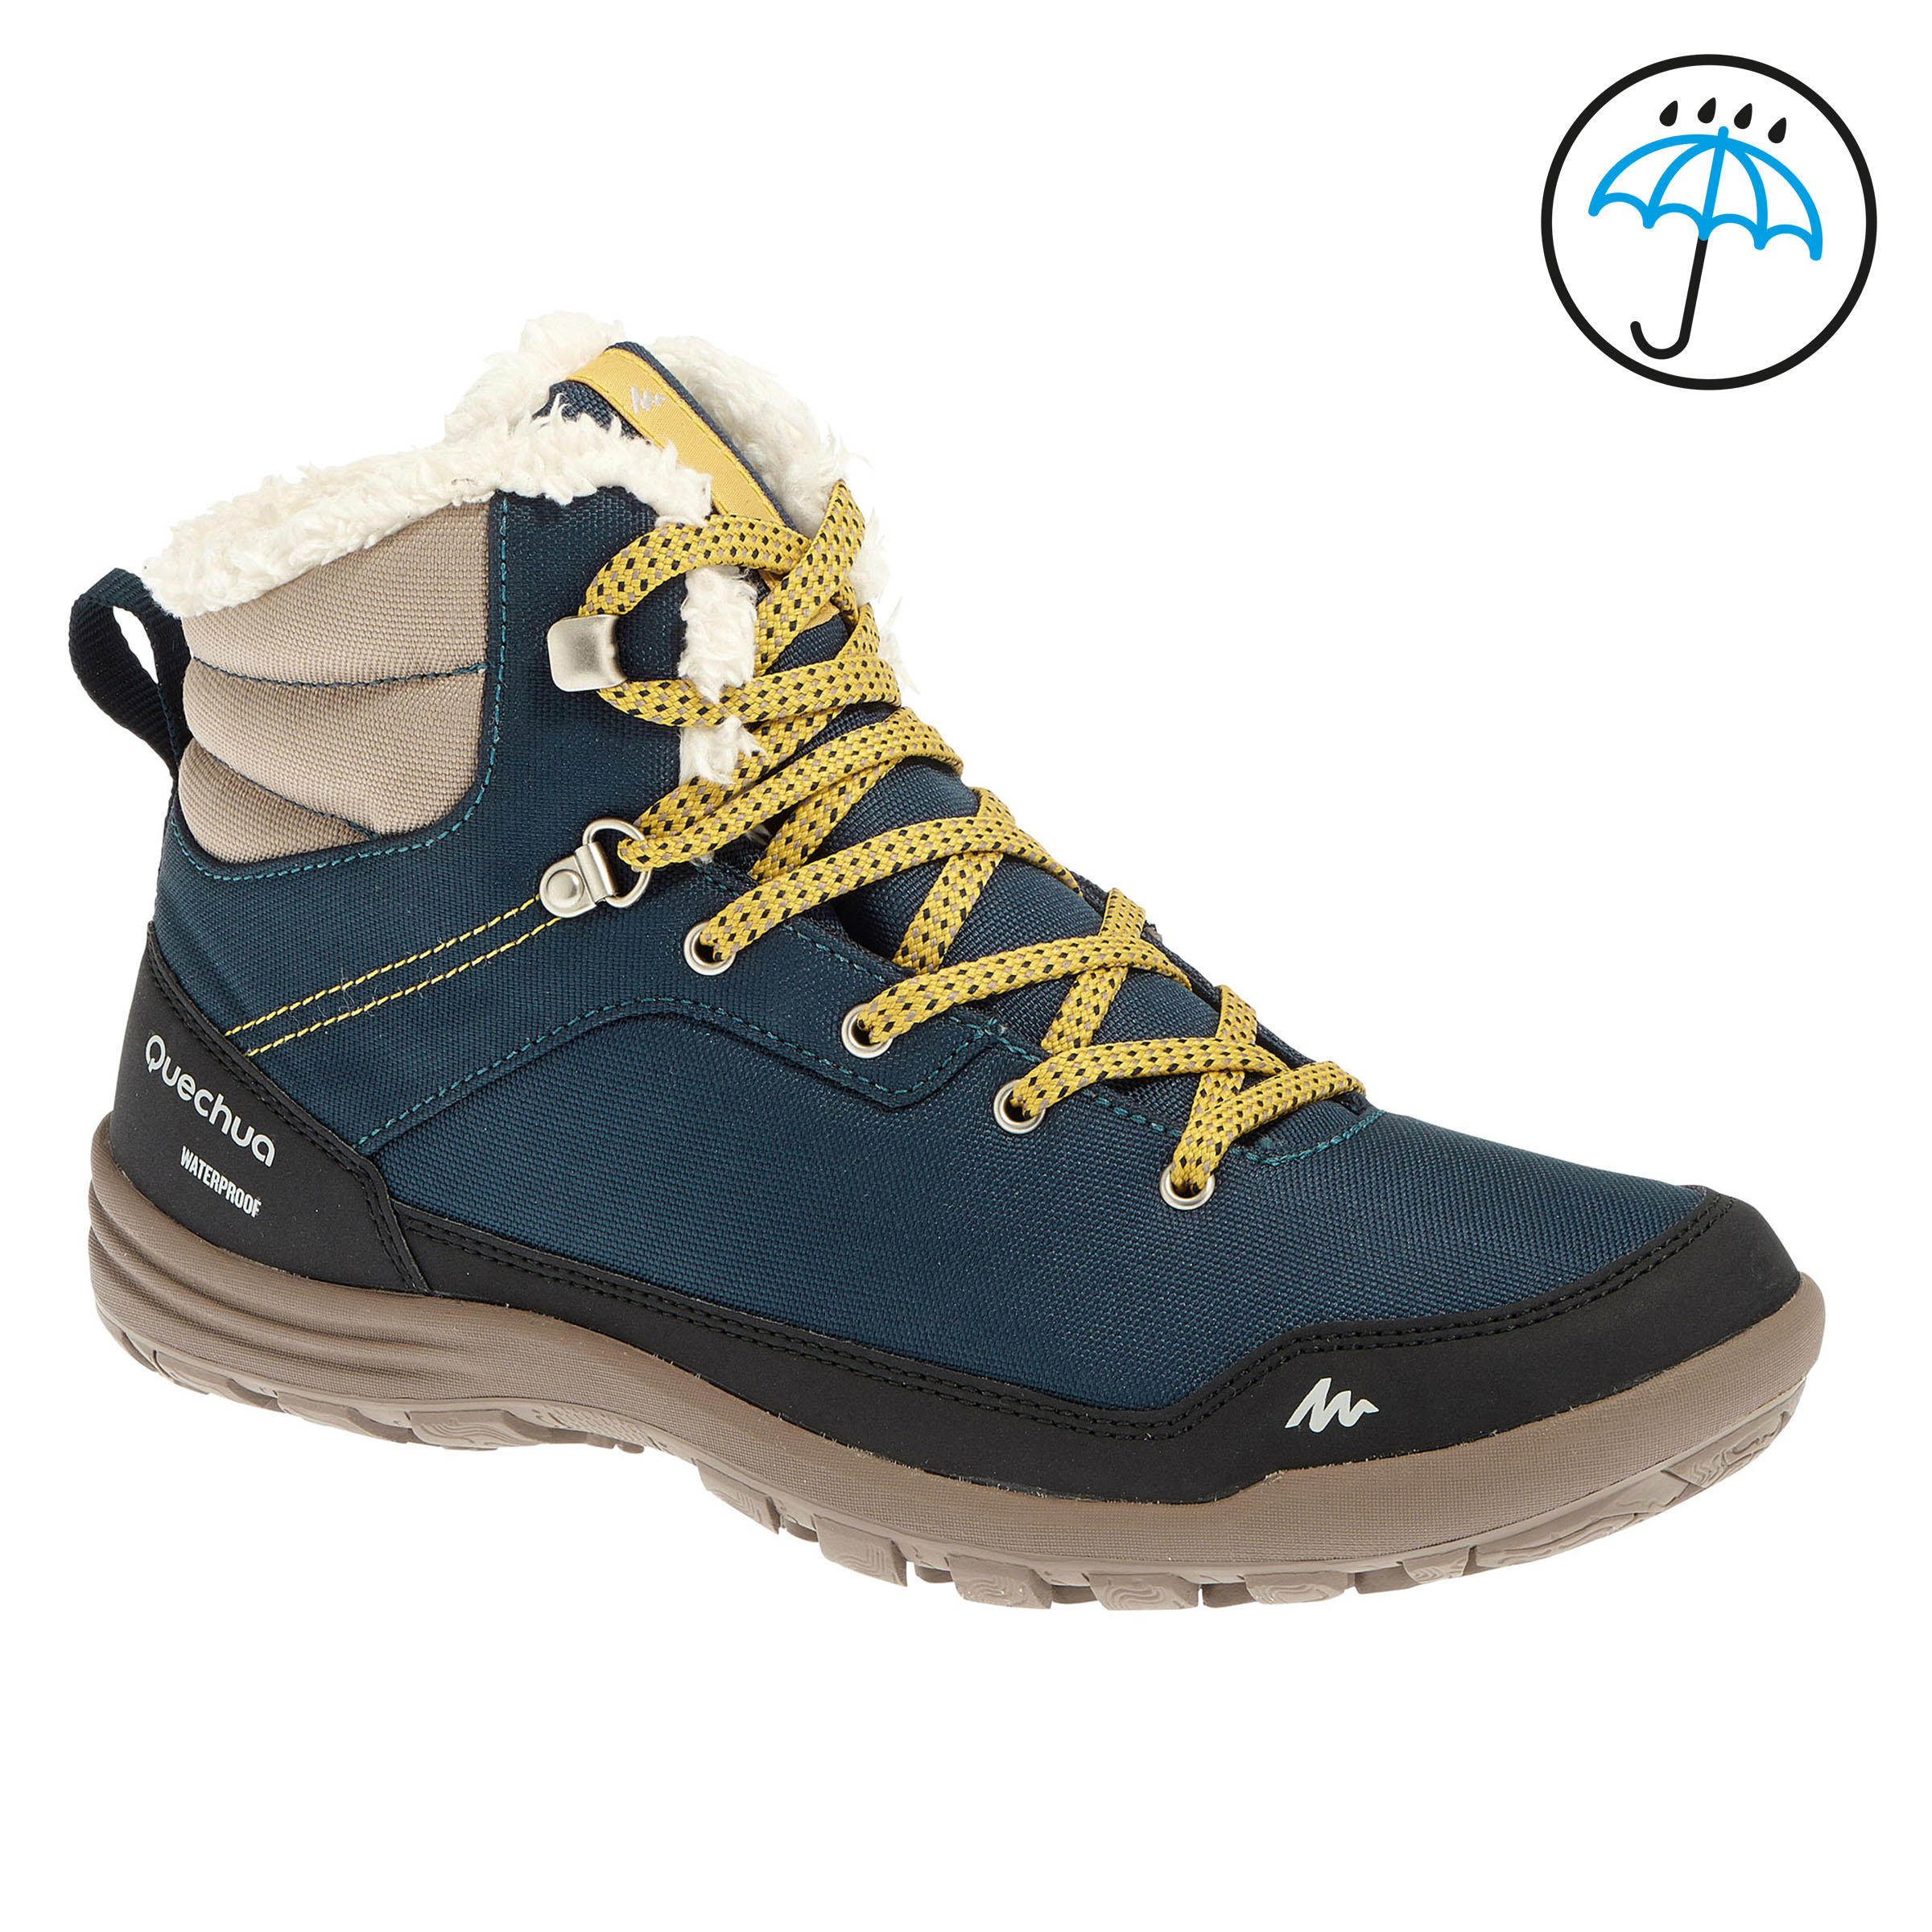 QUECHUA Arpenaz 100 Mid Warm Women'S Waterproof Hiking Boots - Blue